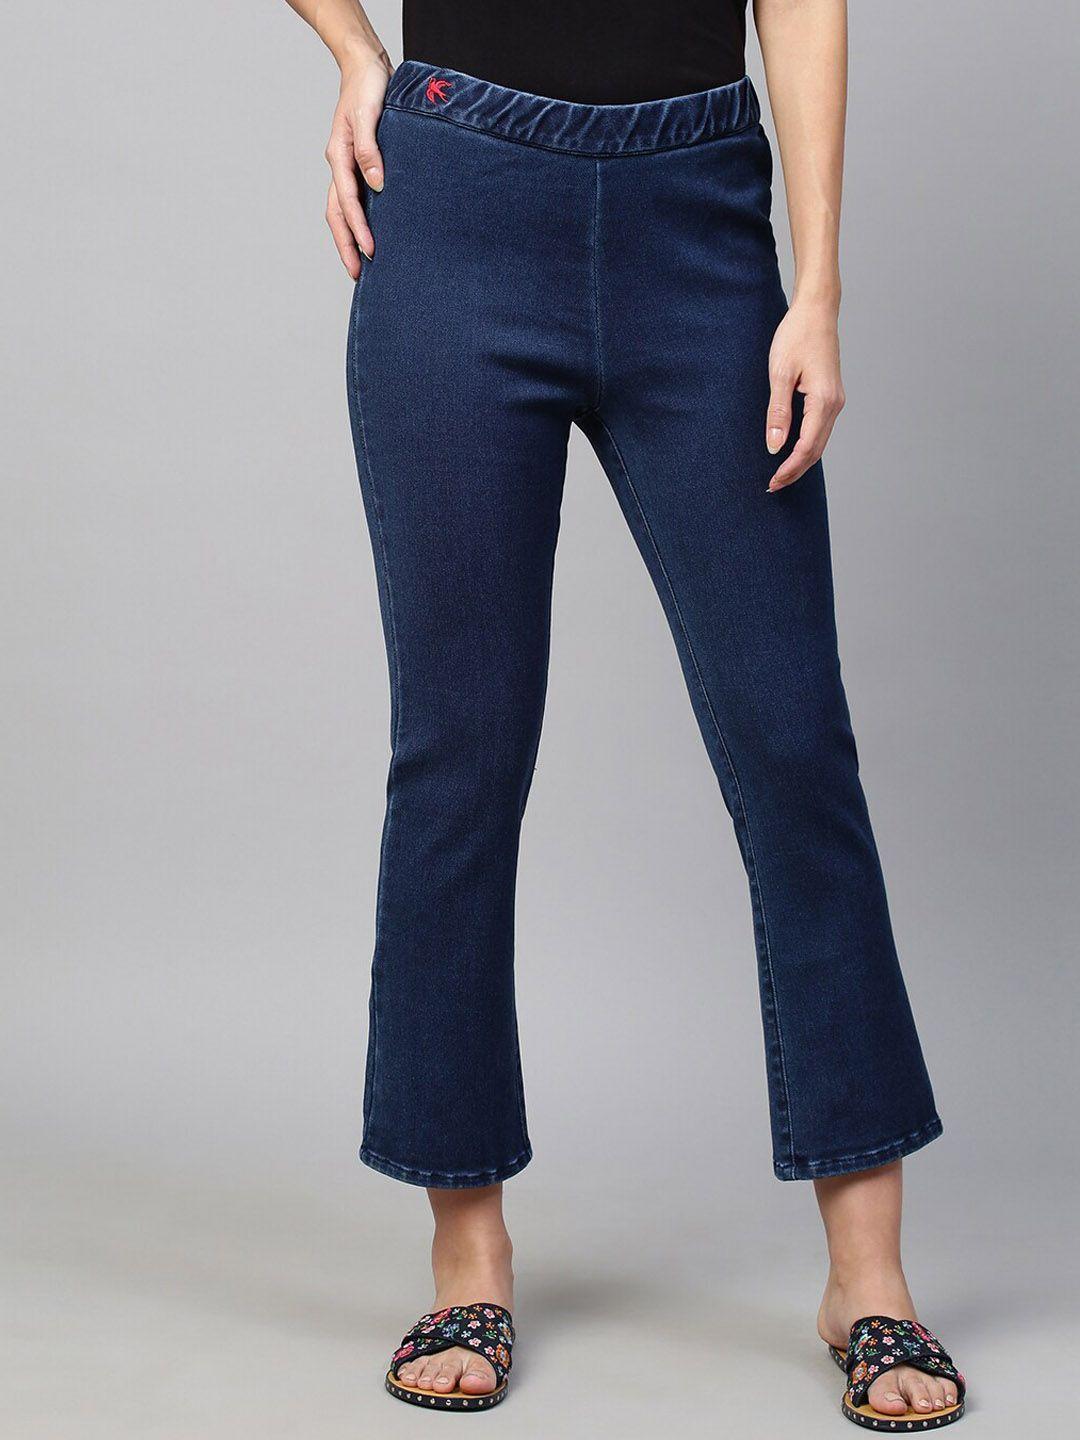 chemistry women navy blue bootcut jeans